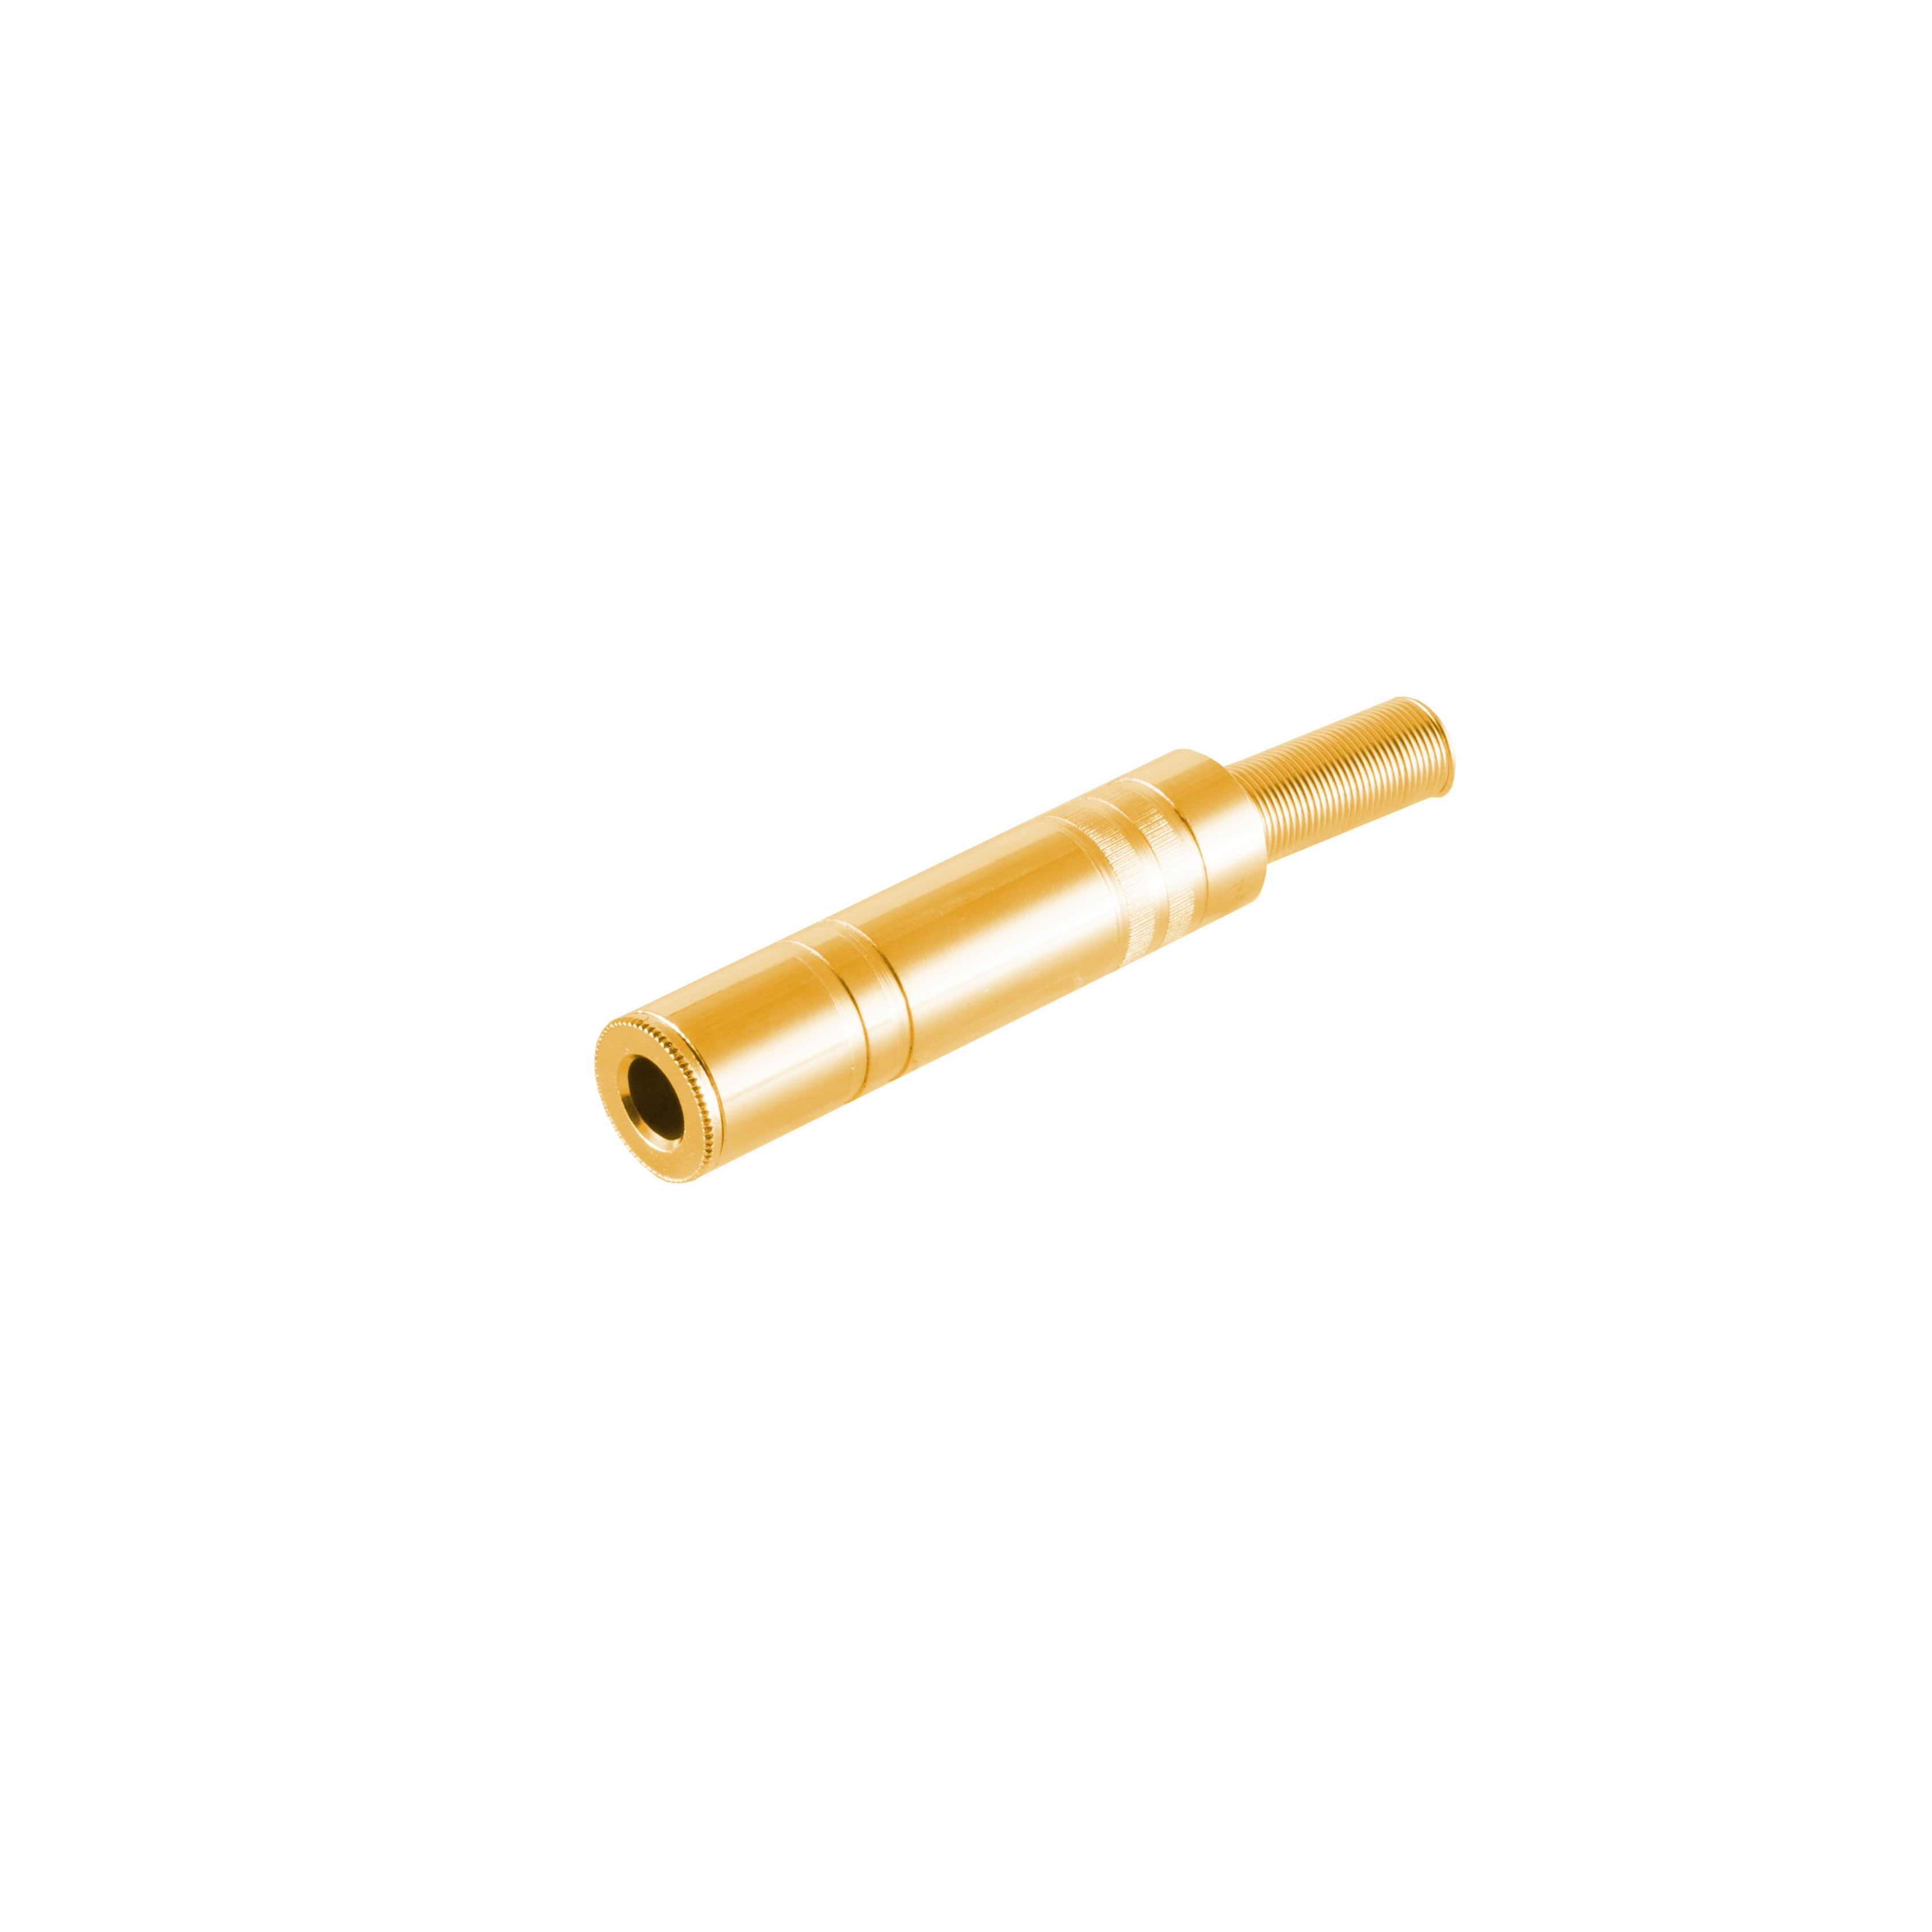 KABELBUDE 6,3mm vergoldet Metall, Klinkenkupplung Mono Klinke